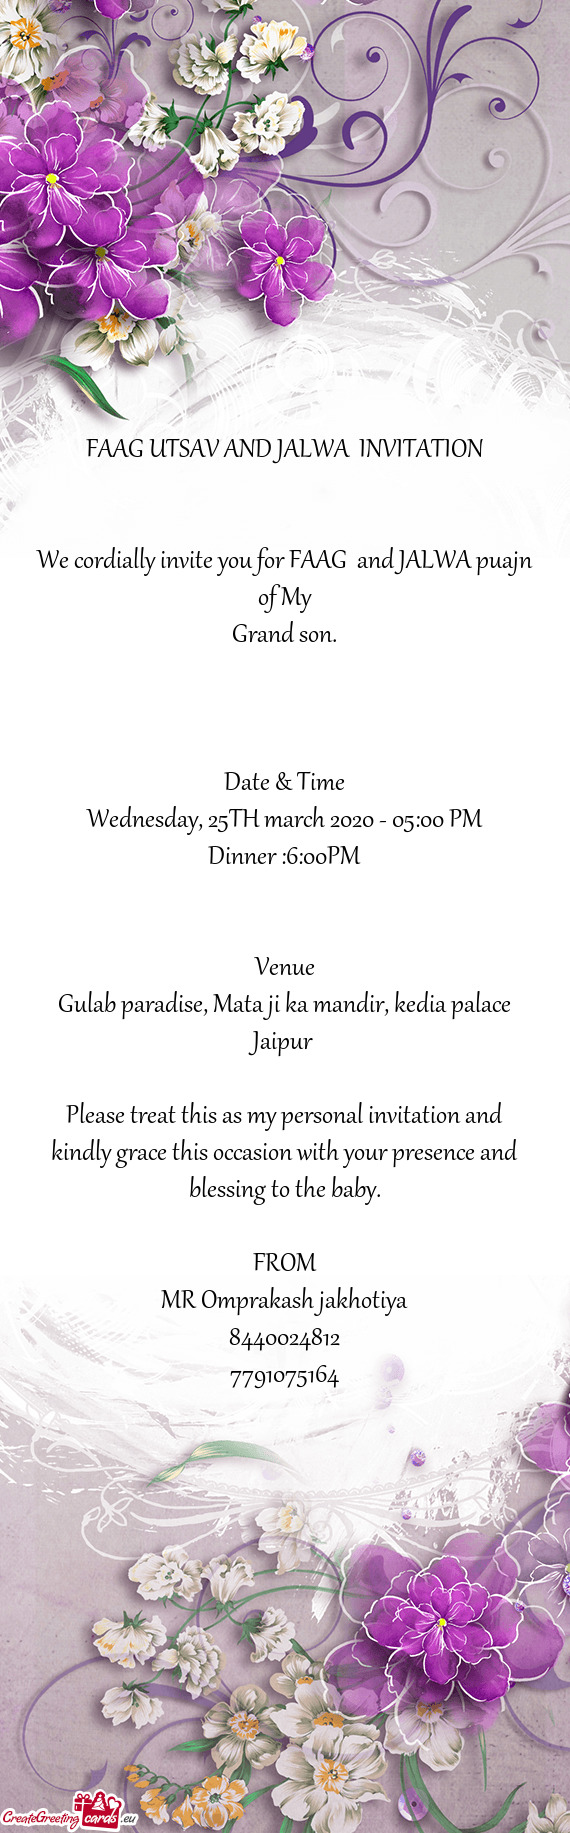 FAAG UTSAV AND JALWA INVITATION